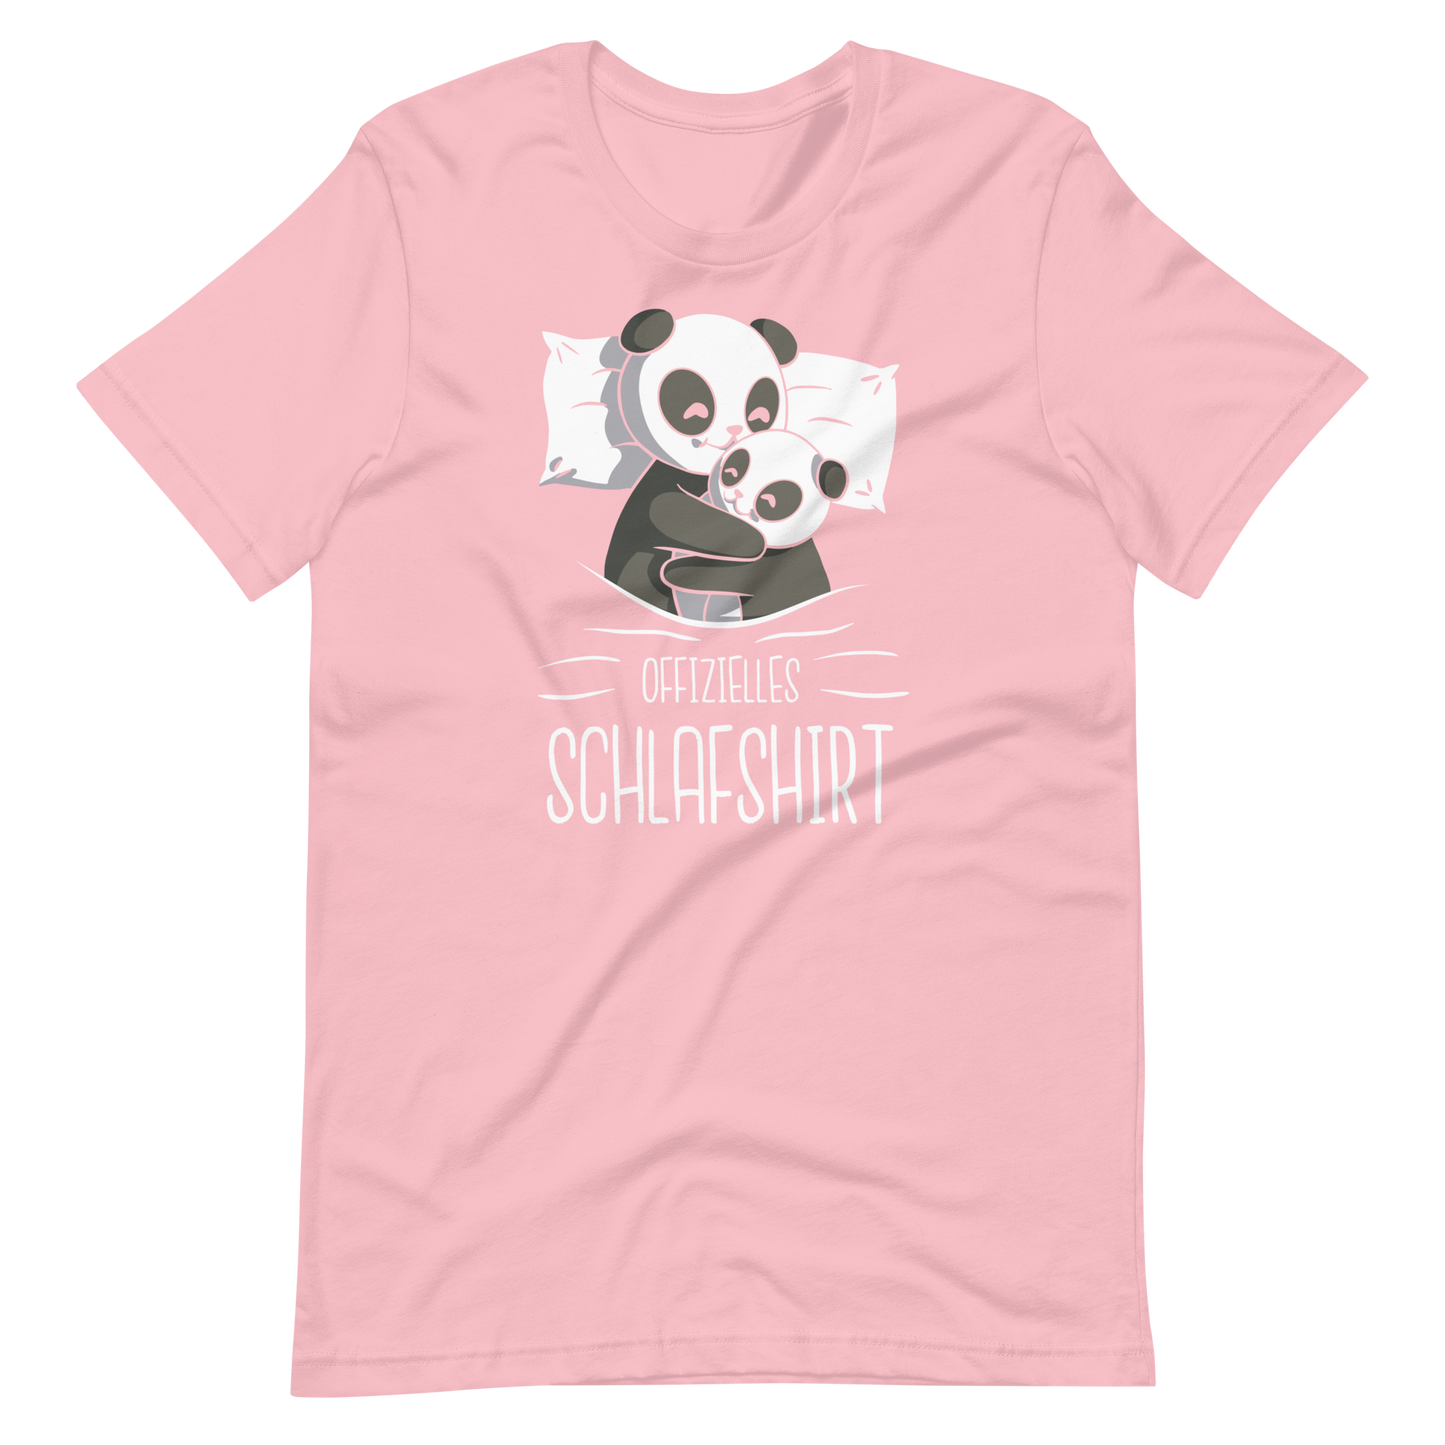 Panda bear animals sleeping | Unisex t-shirt